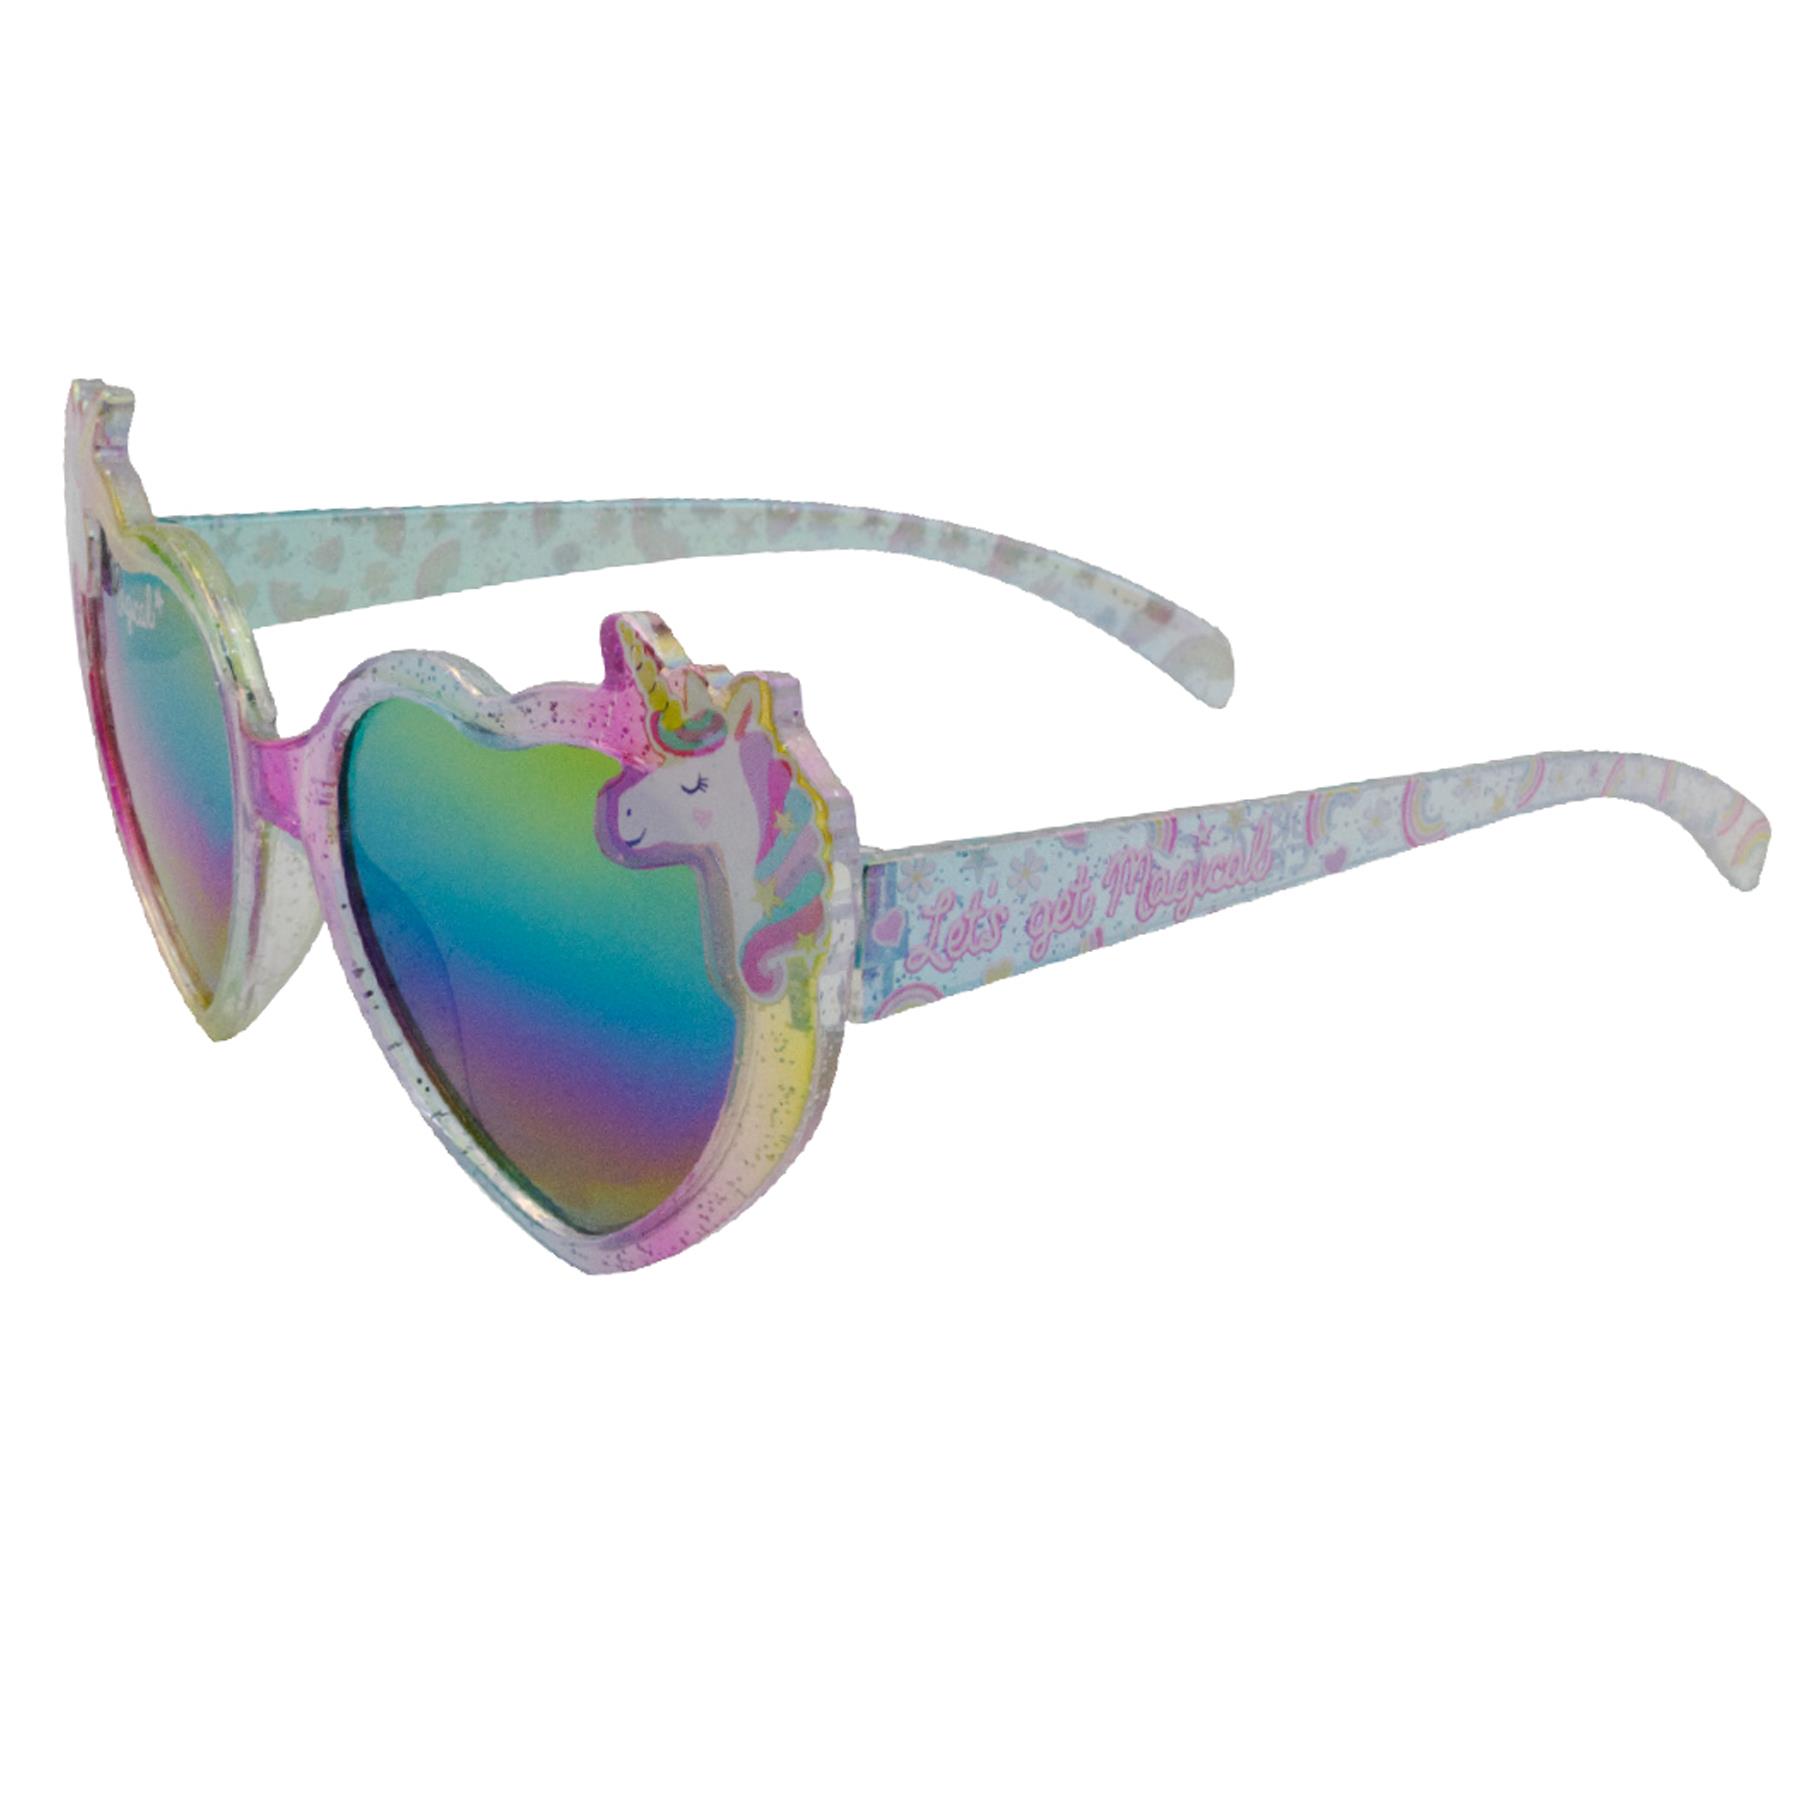 Children's Sunglasses 100% UV protection for Summer Holiday - Girls Unicorn PRKG177